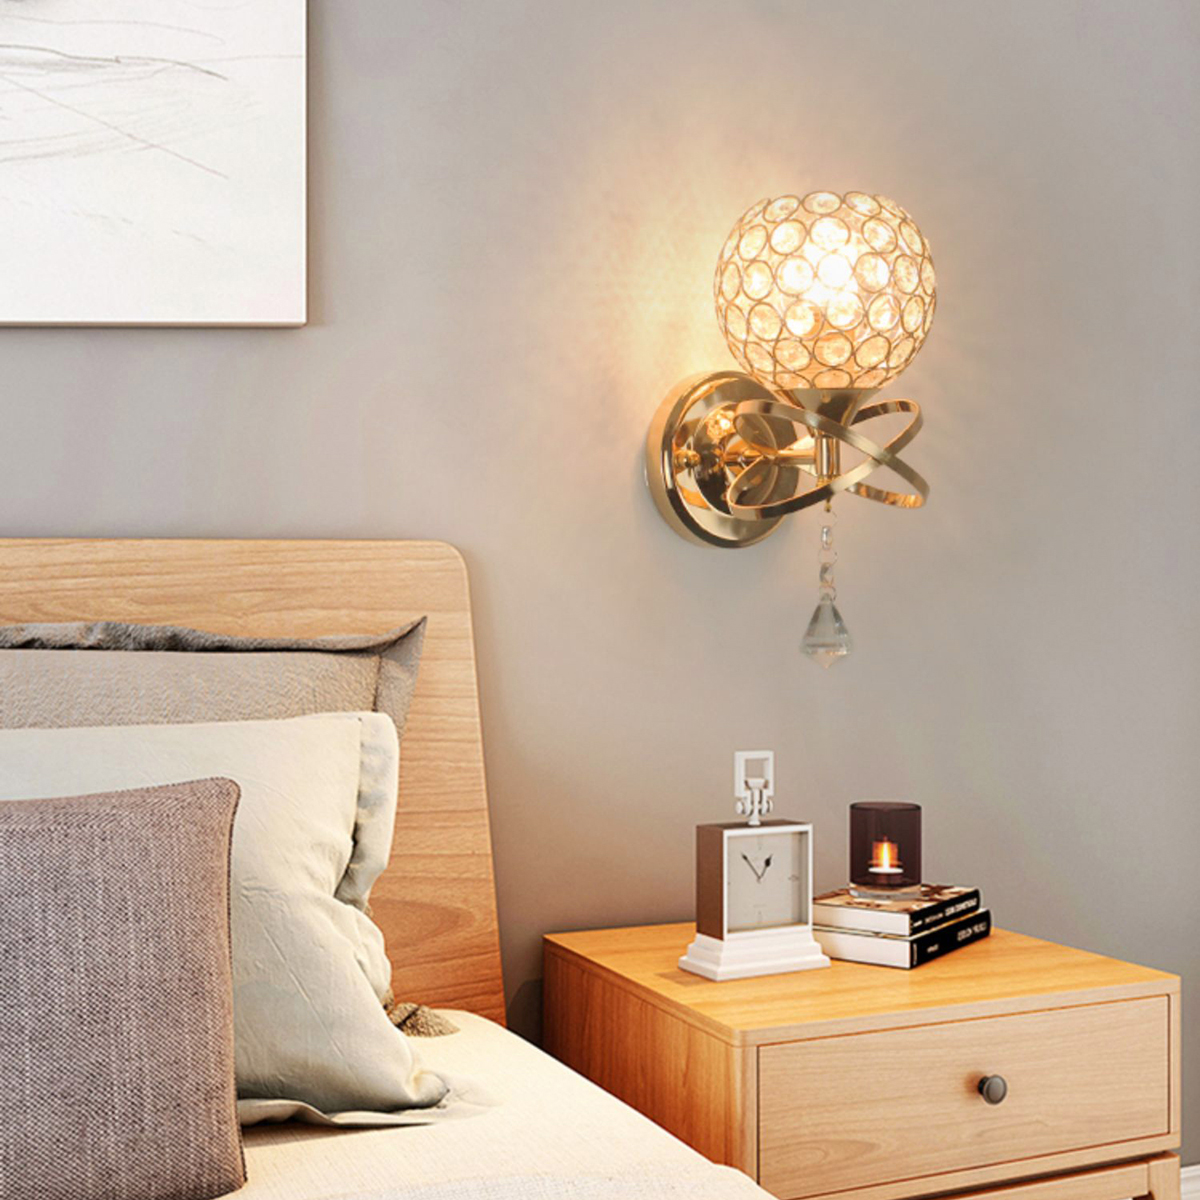 110-220V-E14-Modern-Chrome-Crystal-LED-Wall-Light-Lamp-Luxury-Bedside-Bedroom-Home-Decor-Without-Bul-1797018-5